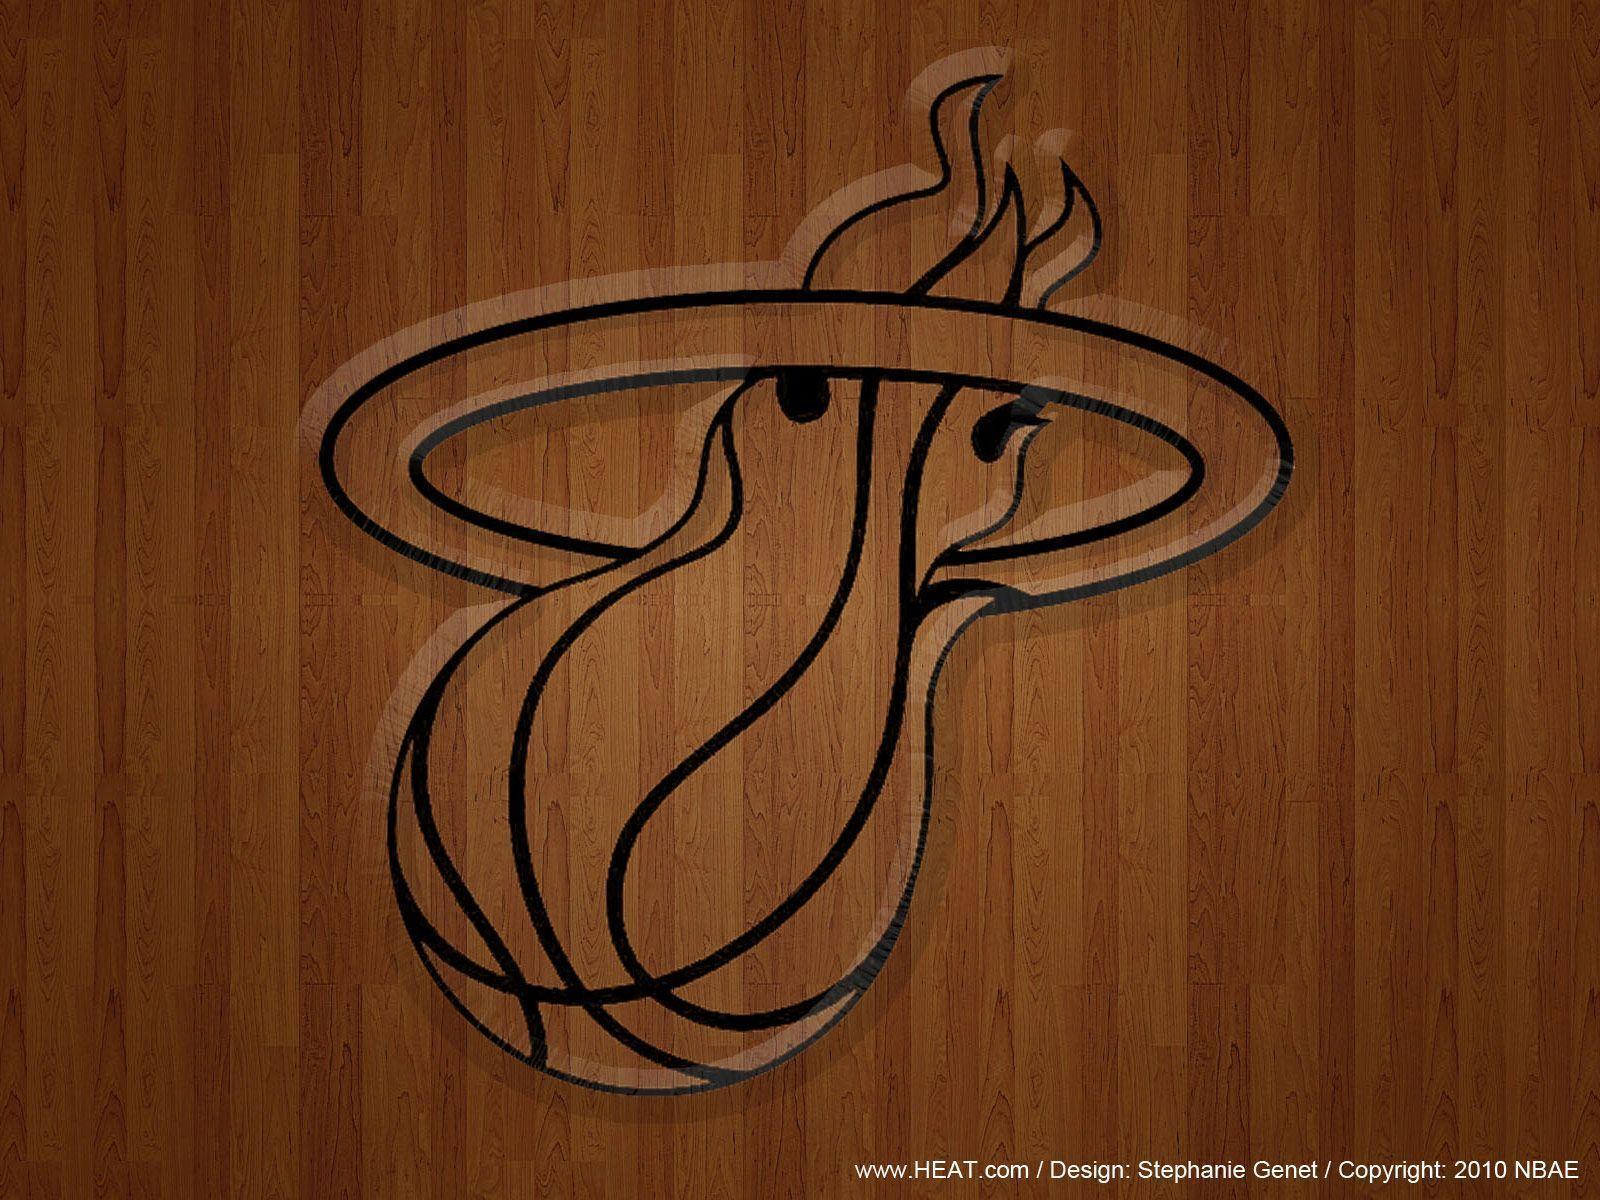 Miami Heat High Definition Widescreen Wallpaper Download. Sport